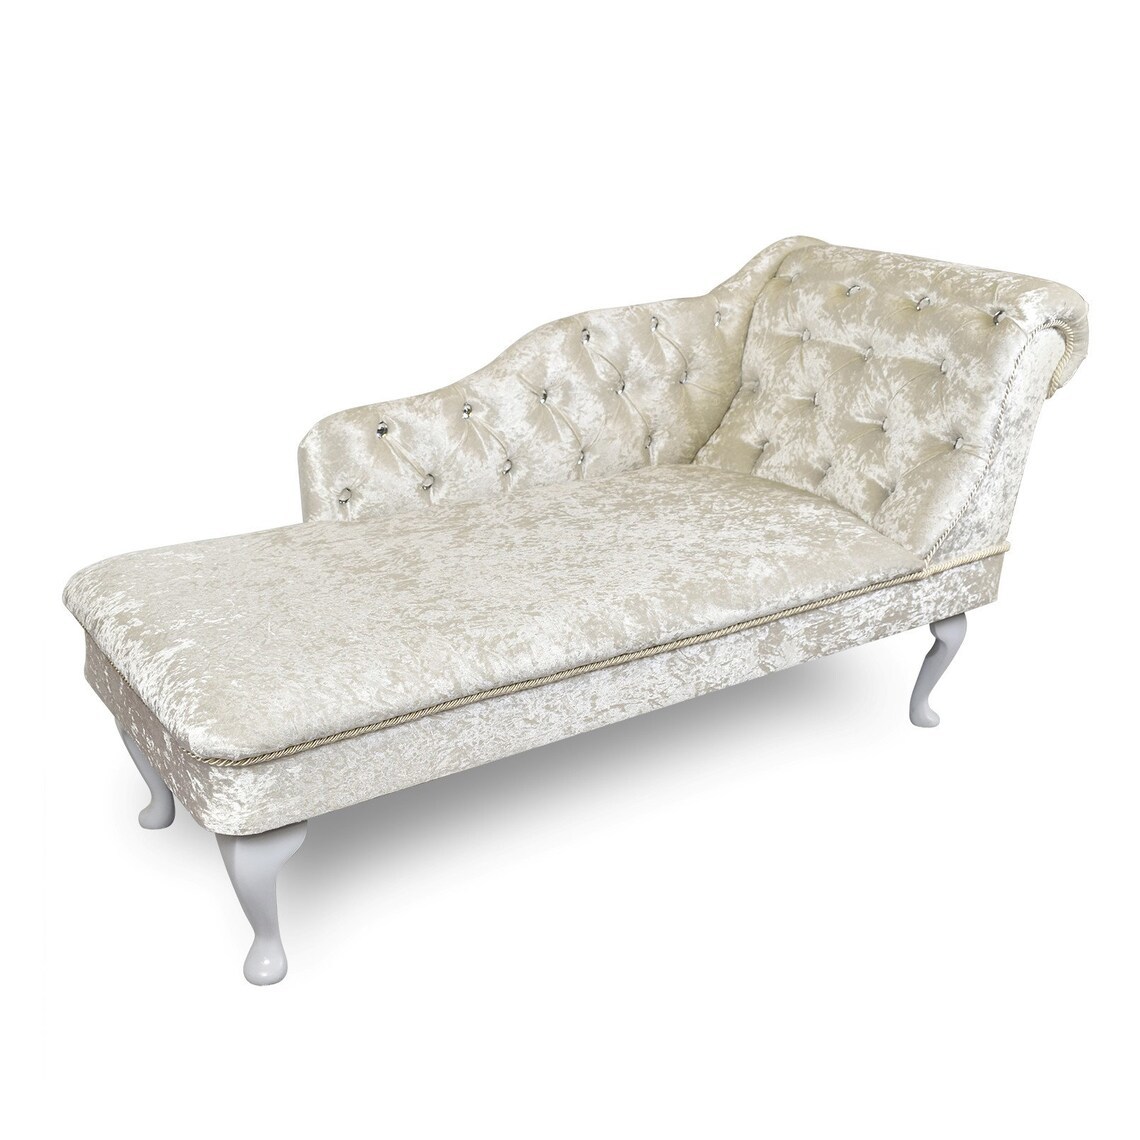 Regent Handmade Tufted White Crushed Velvet Chaise Longue Bedroom Accent Chair - $279.99 - $319.99